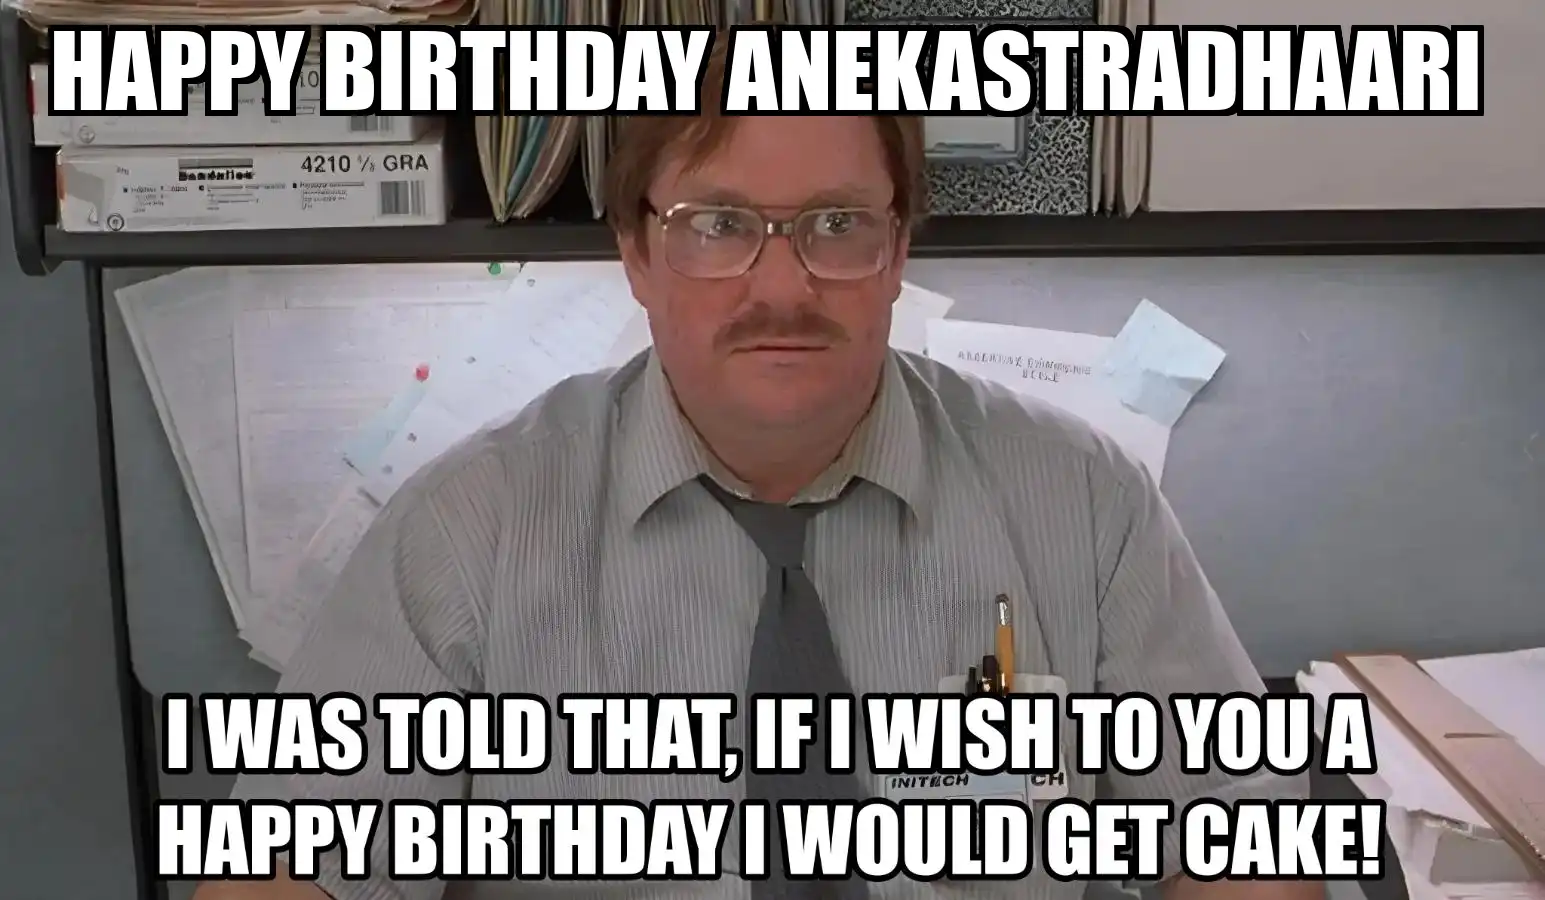 Happy Birthday Anekastradhaari I Would Get A Cake Meme